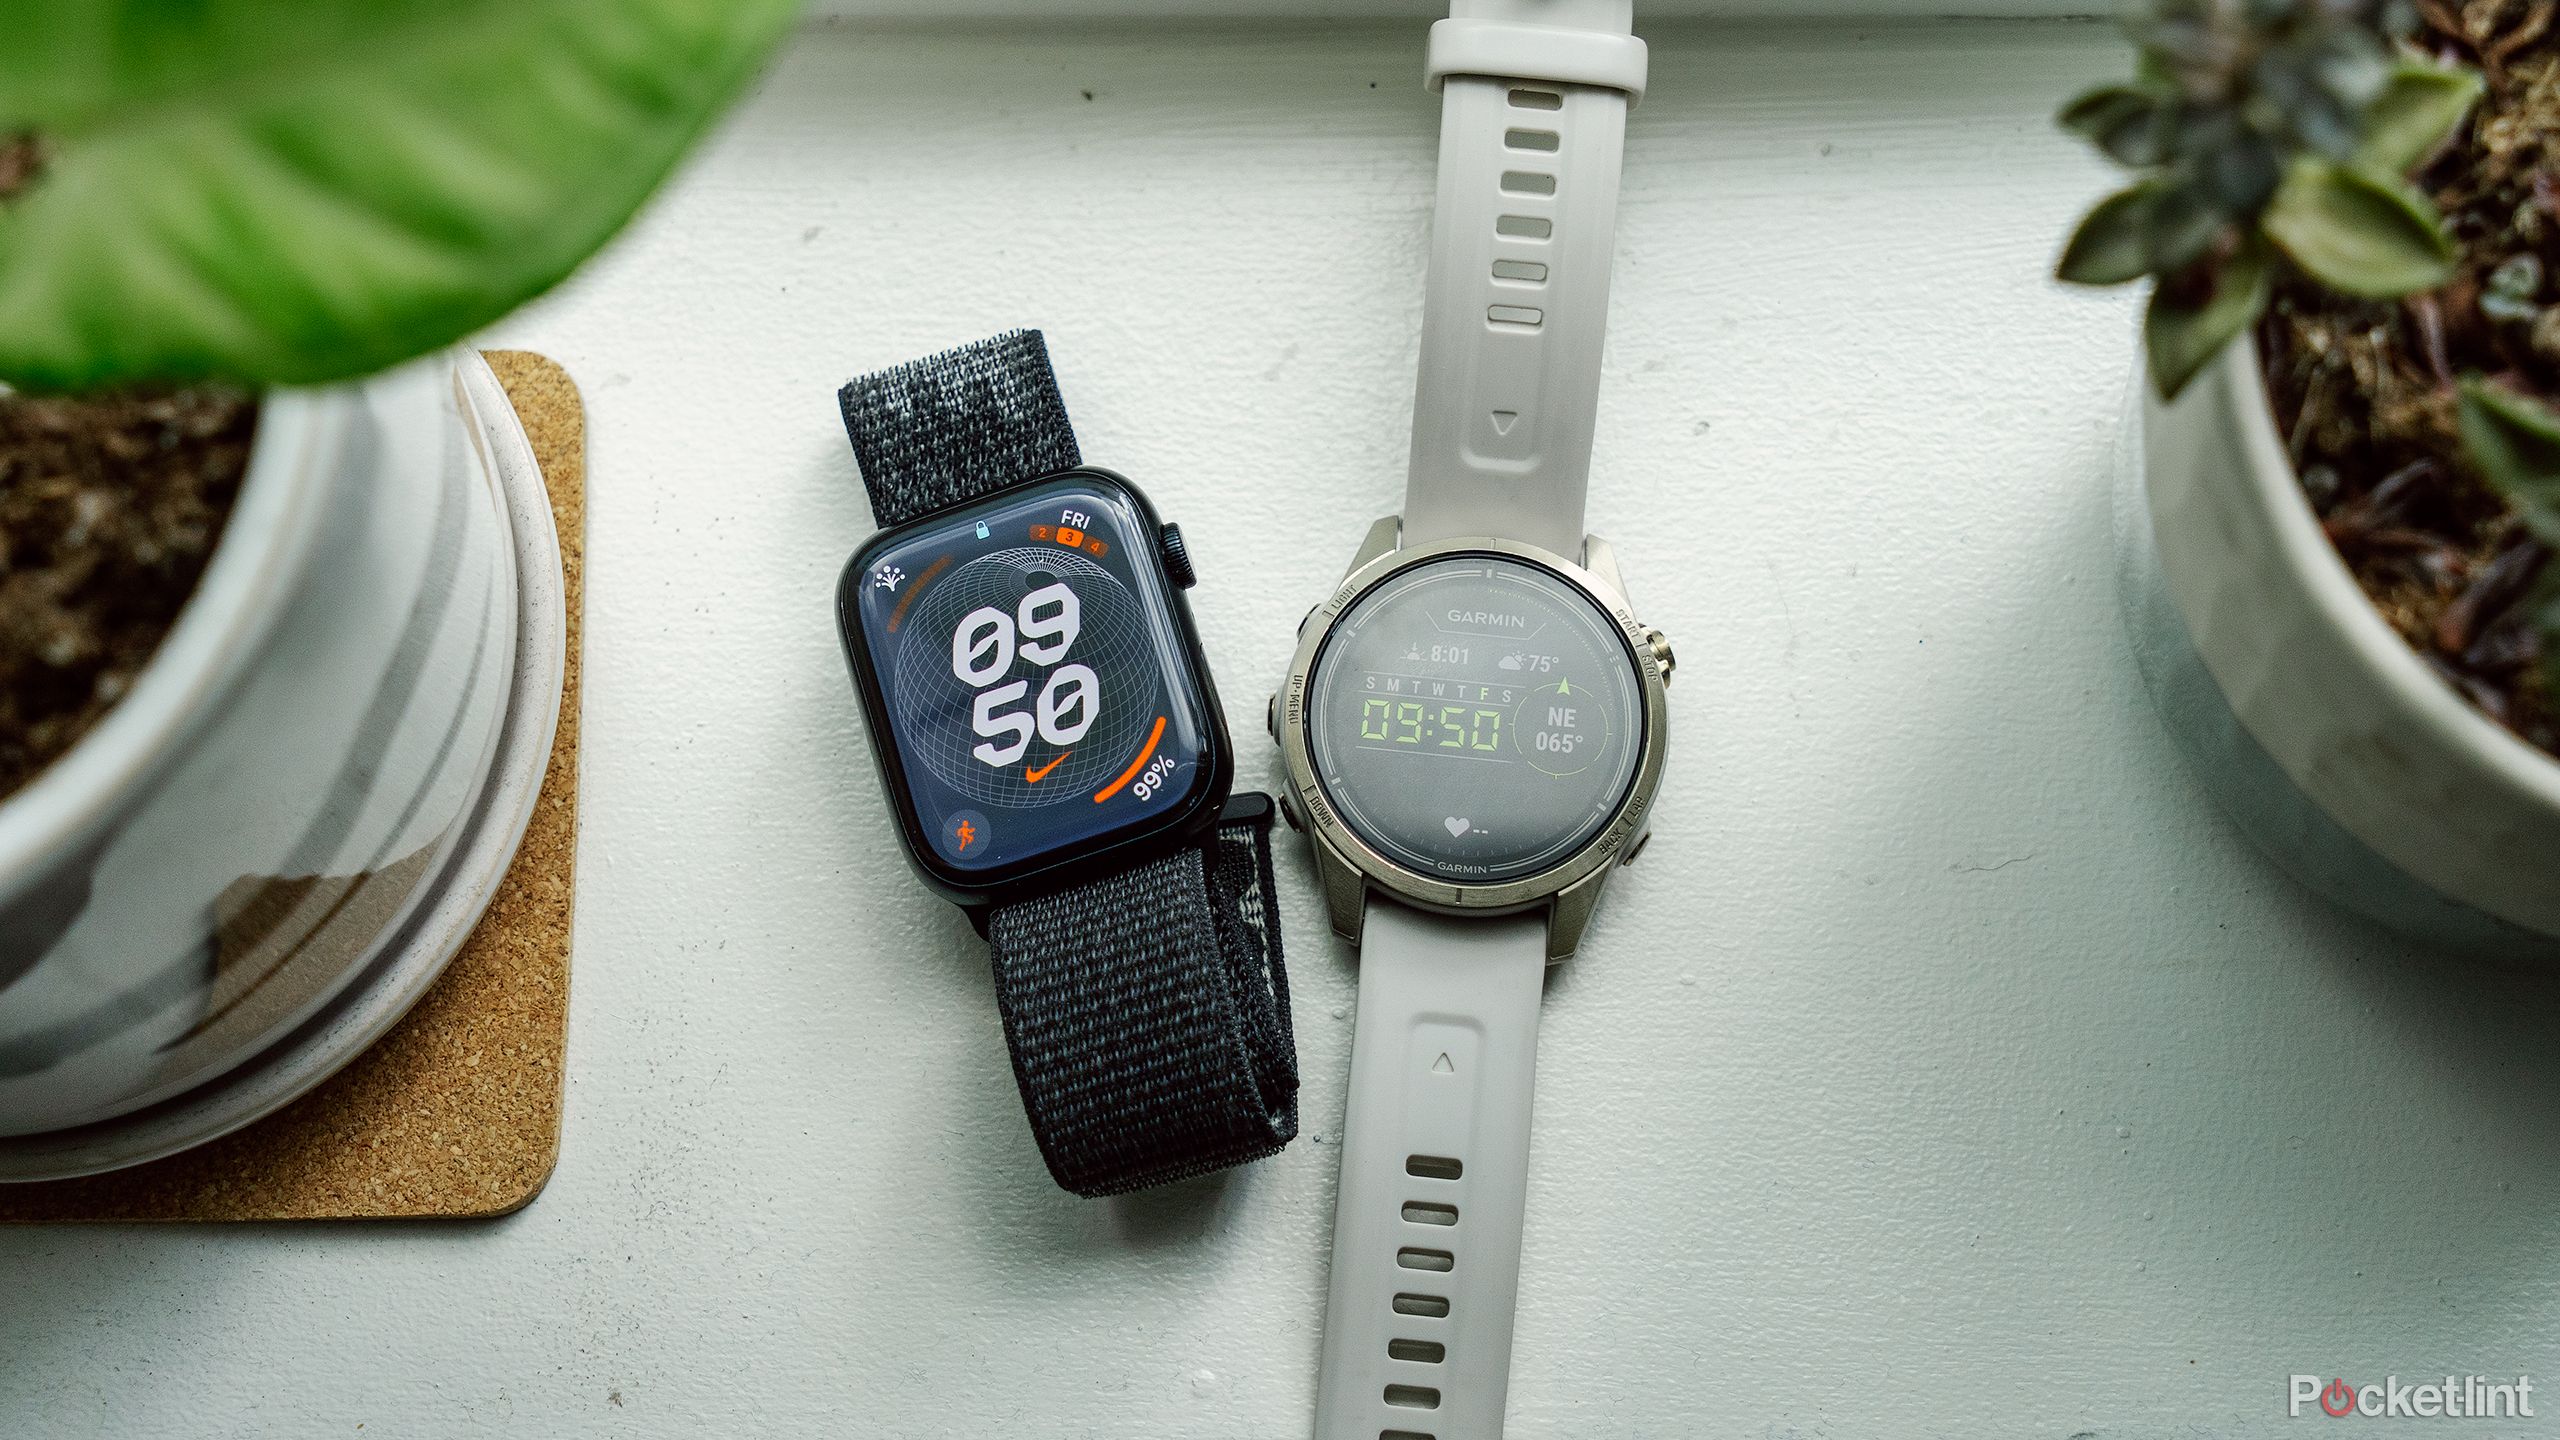 The Apple Watch next to the Garmin epix Pro